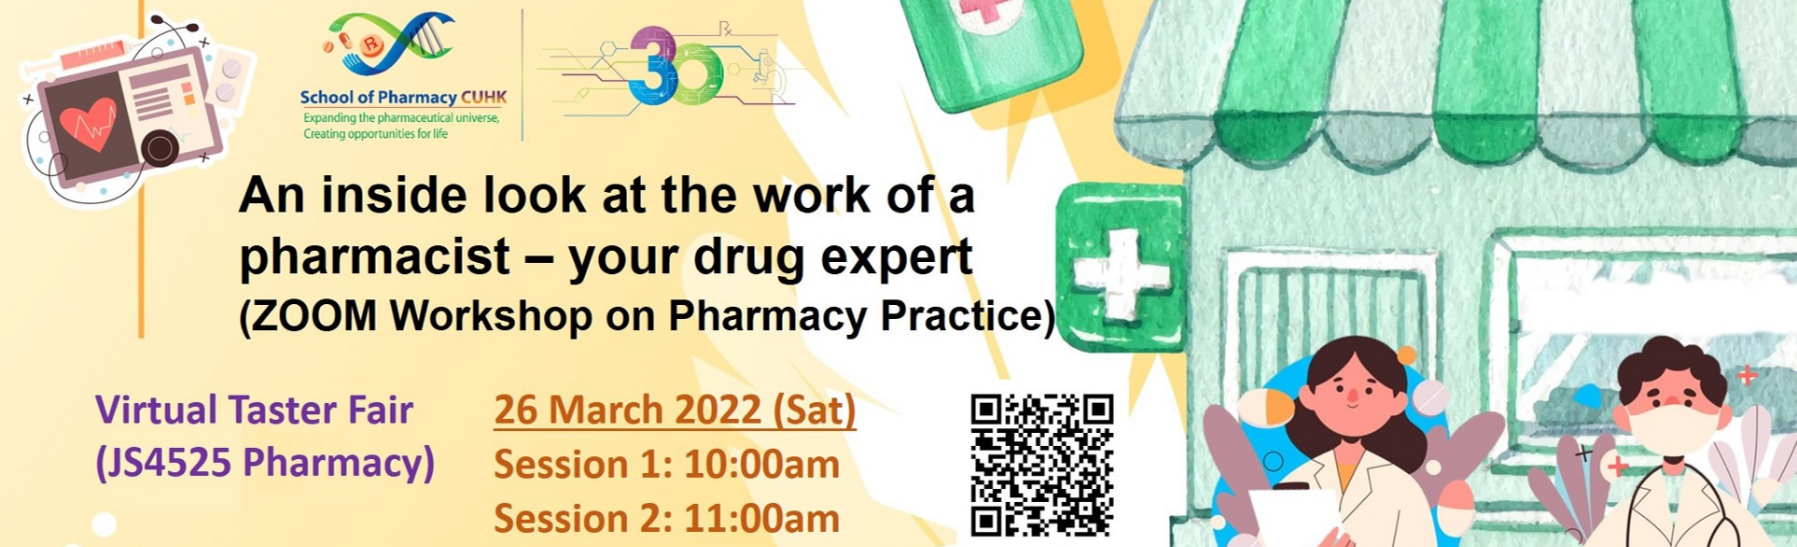 CUHK Virtual Taster Fair “ZOOM Workshop on Pharmacy Practice”